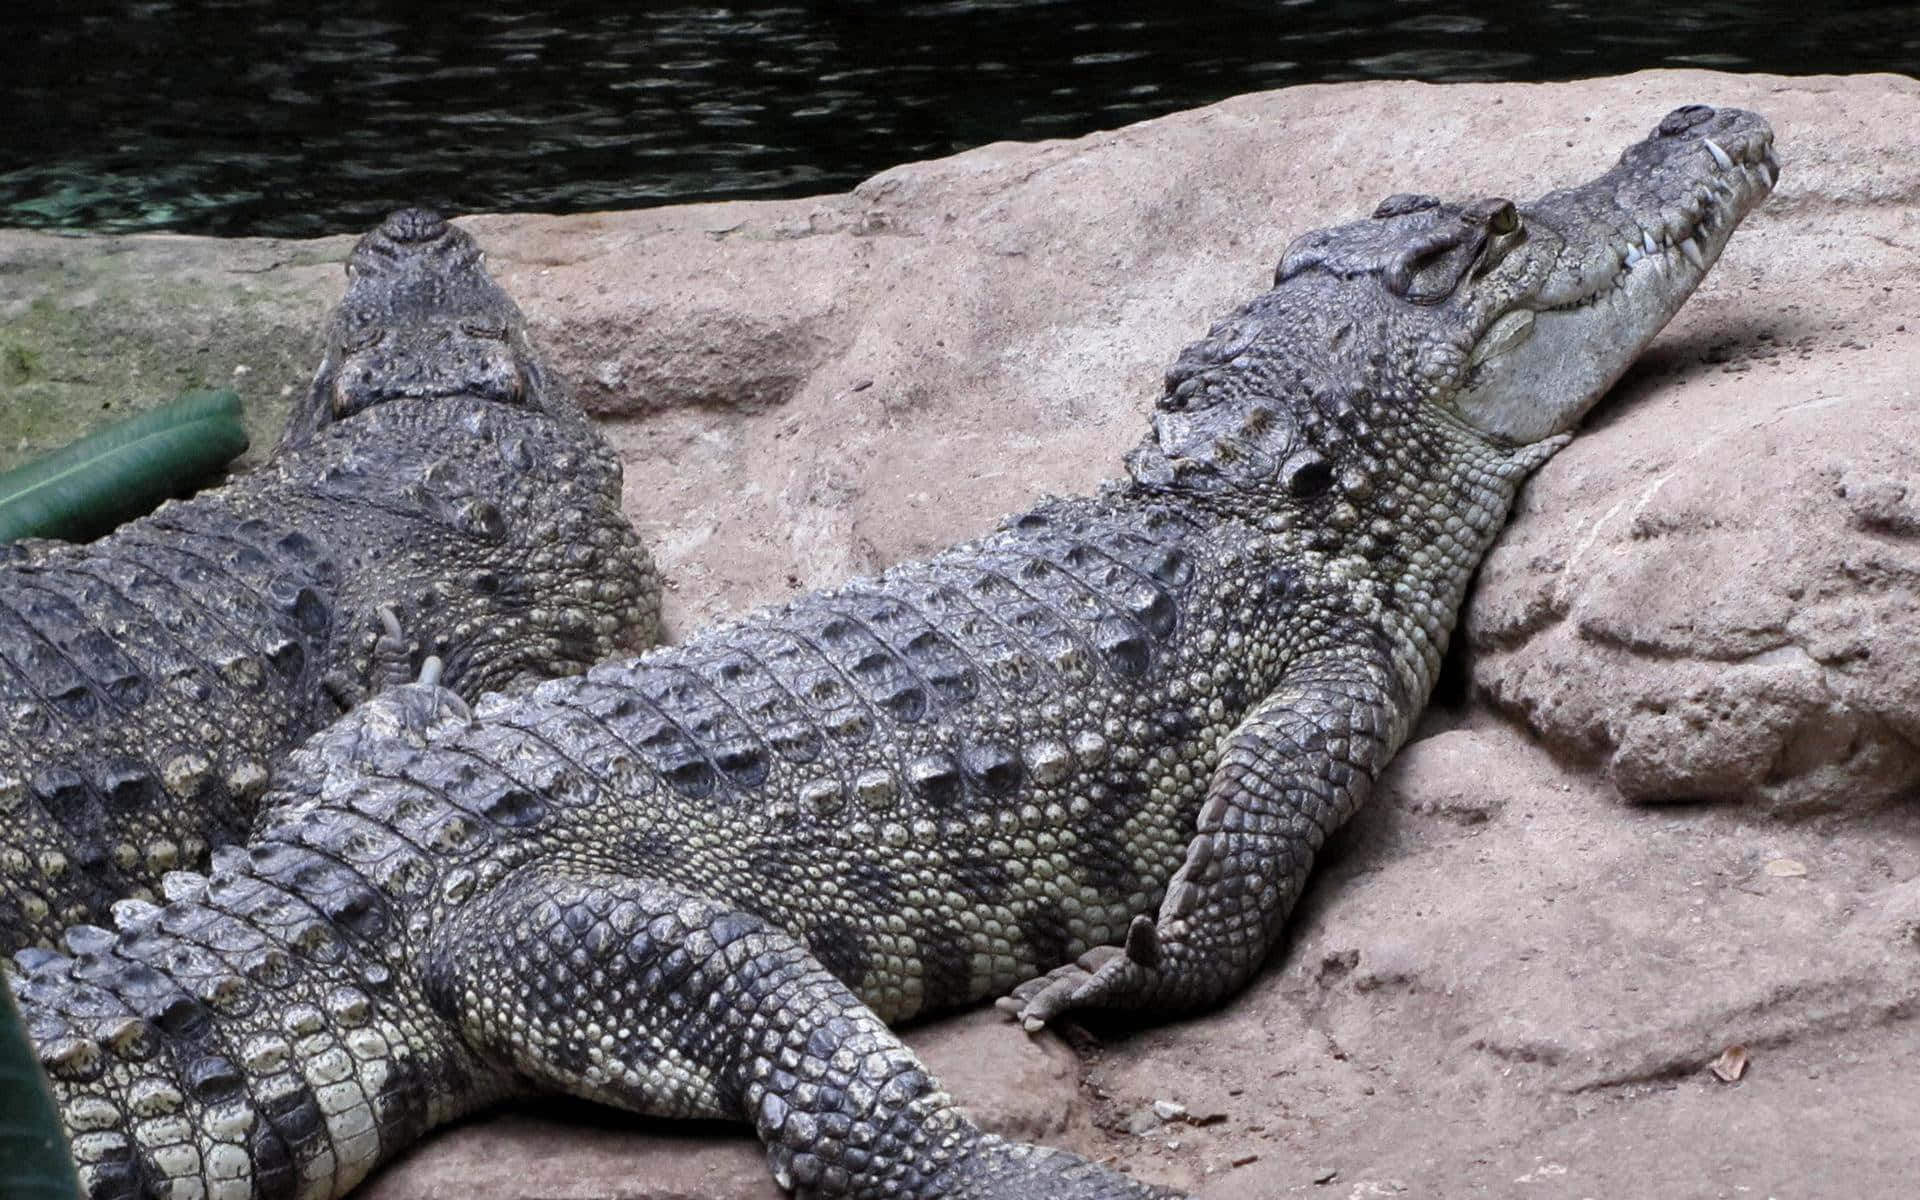 Alligator enjoying the sun